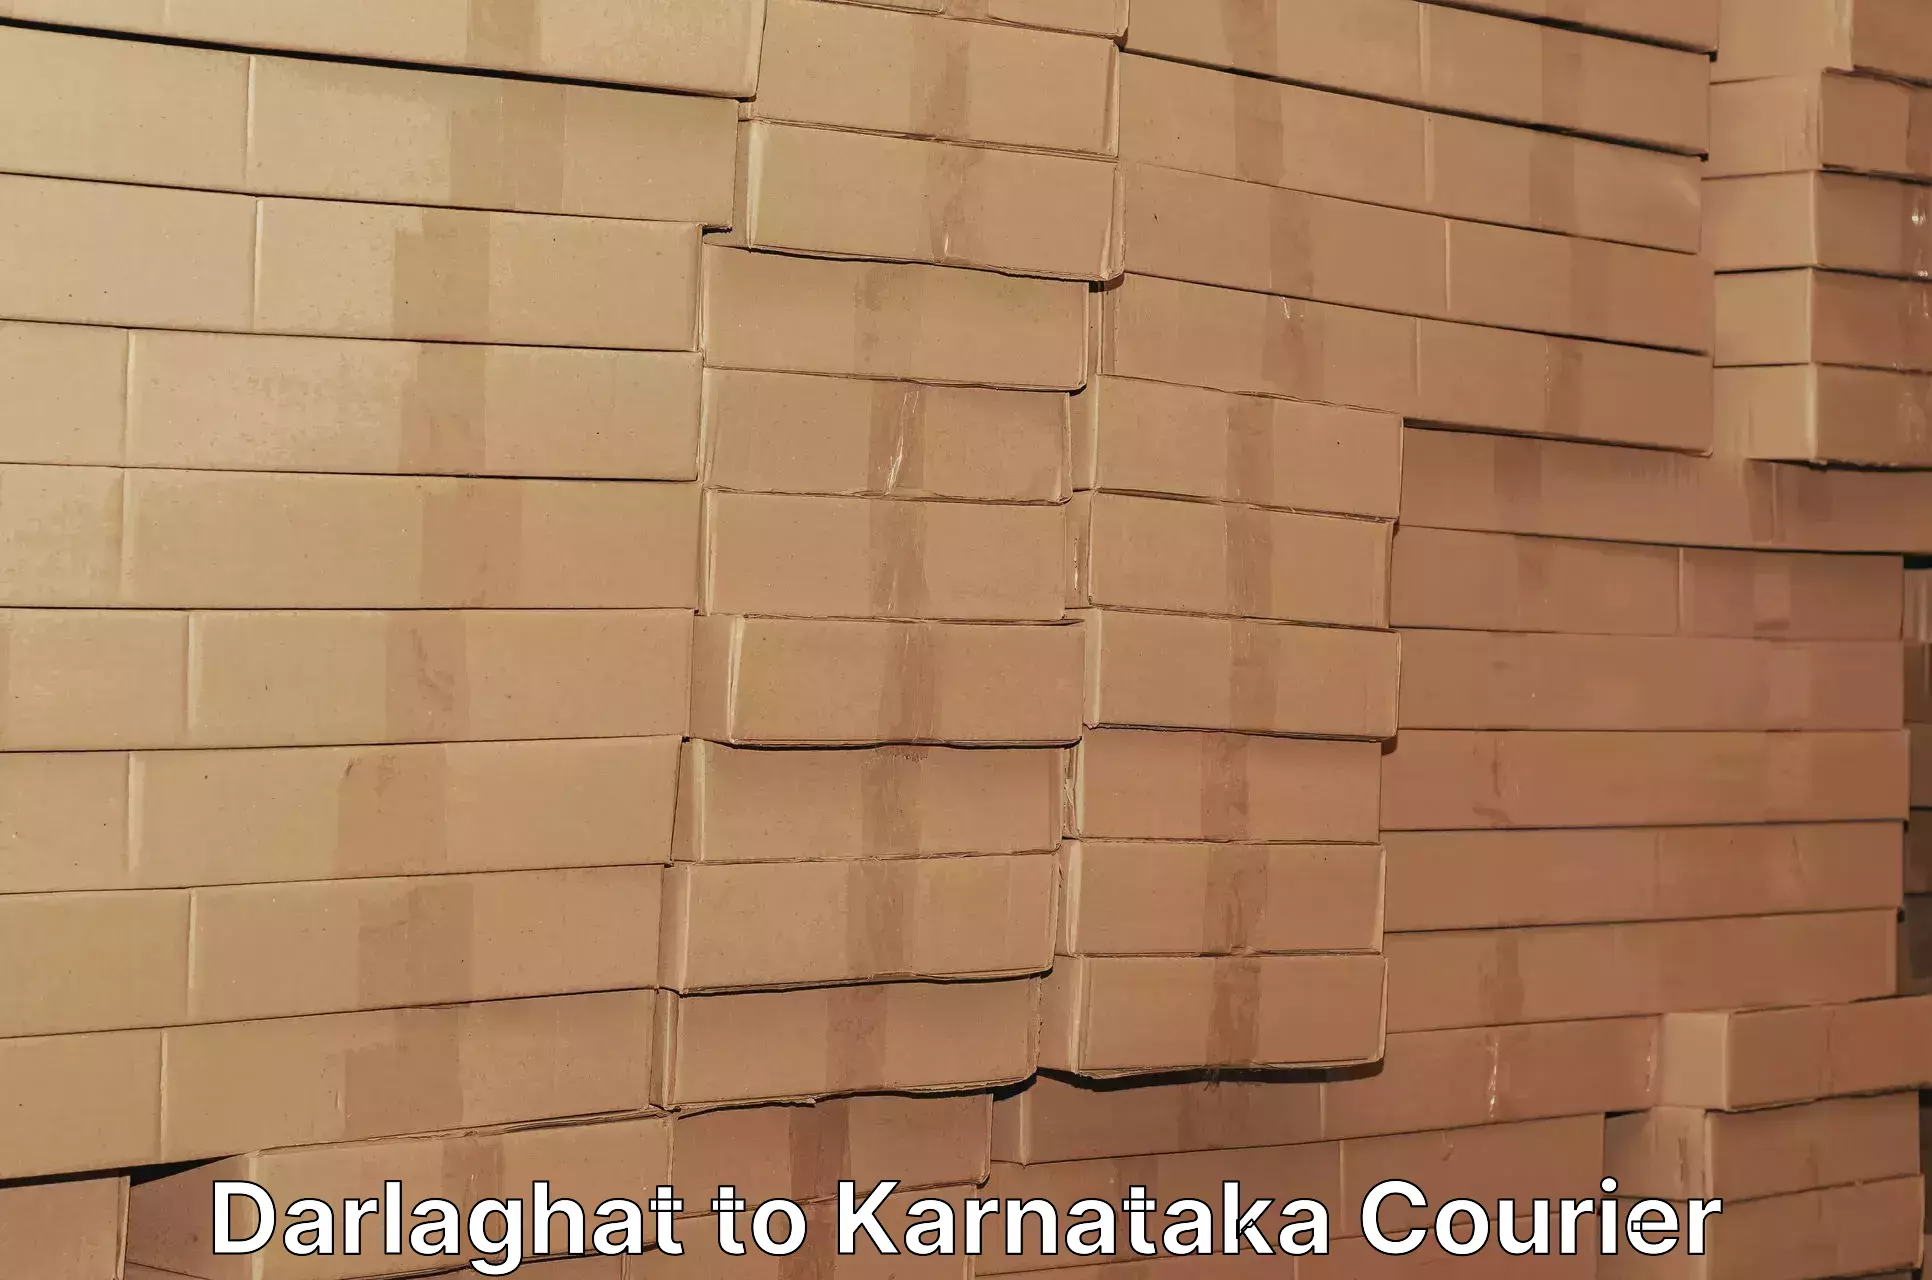 Courier service efficiency in Darlaghat to Karnataka